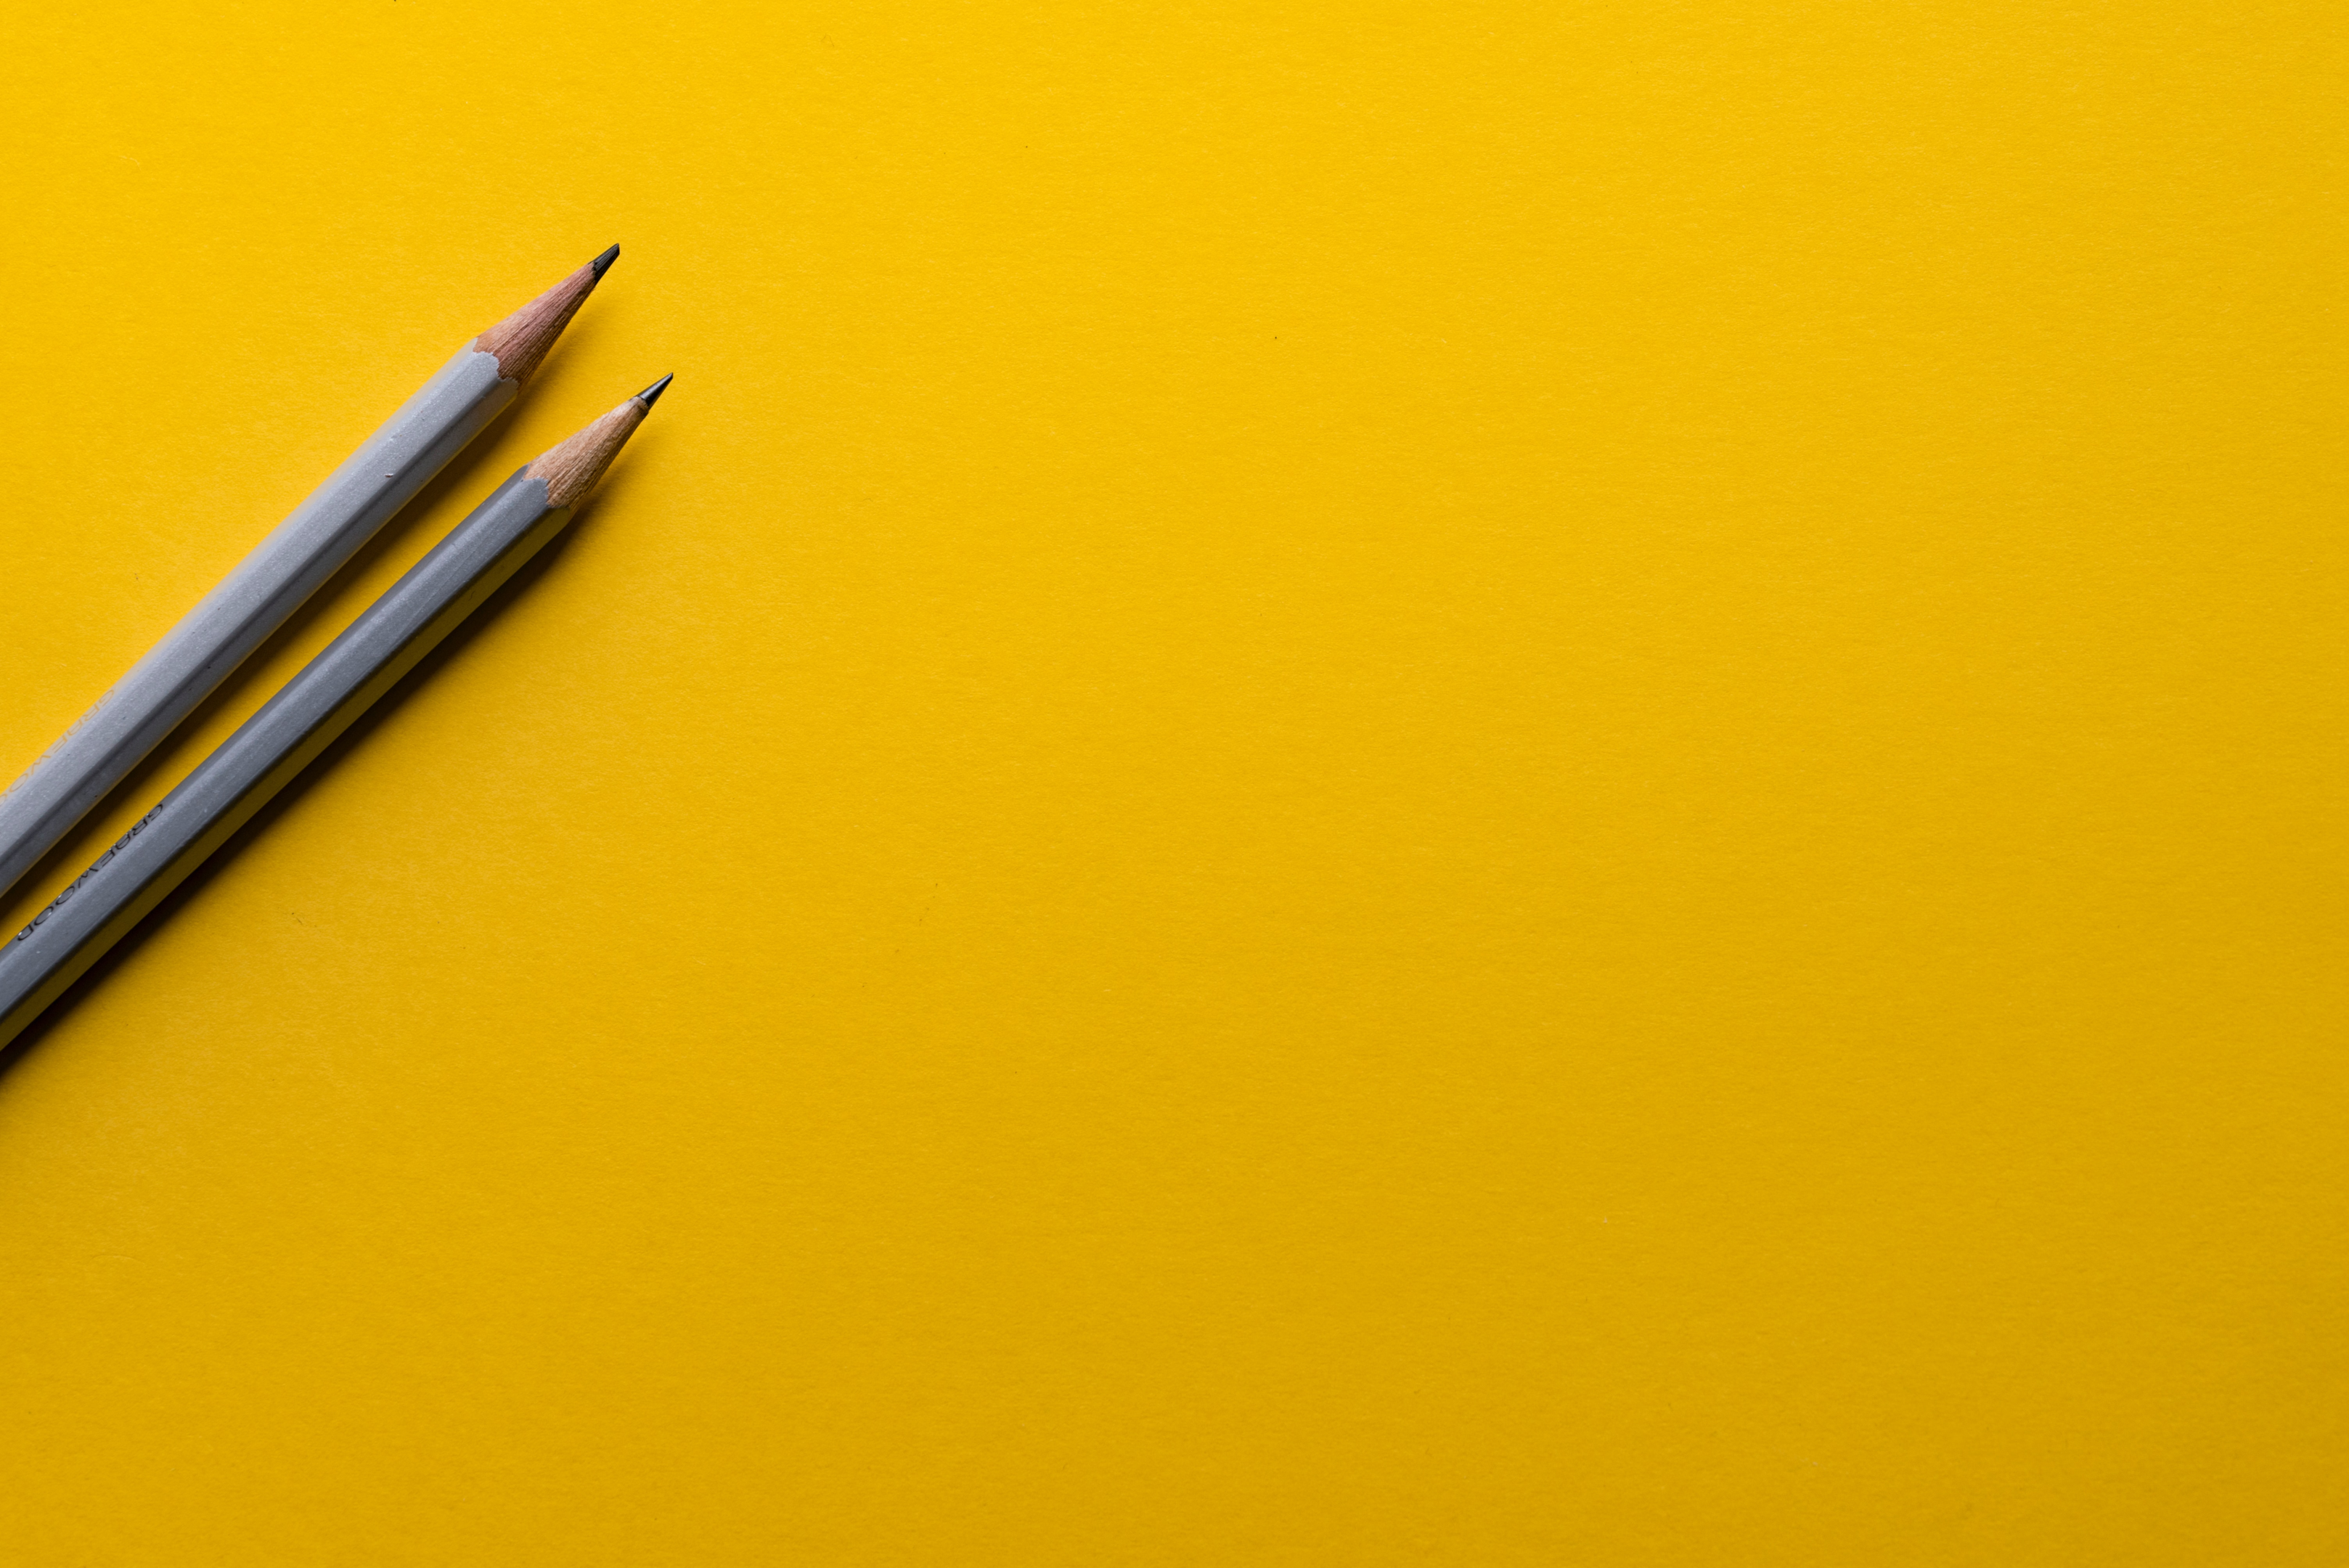 Pencils, yellow background.